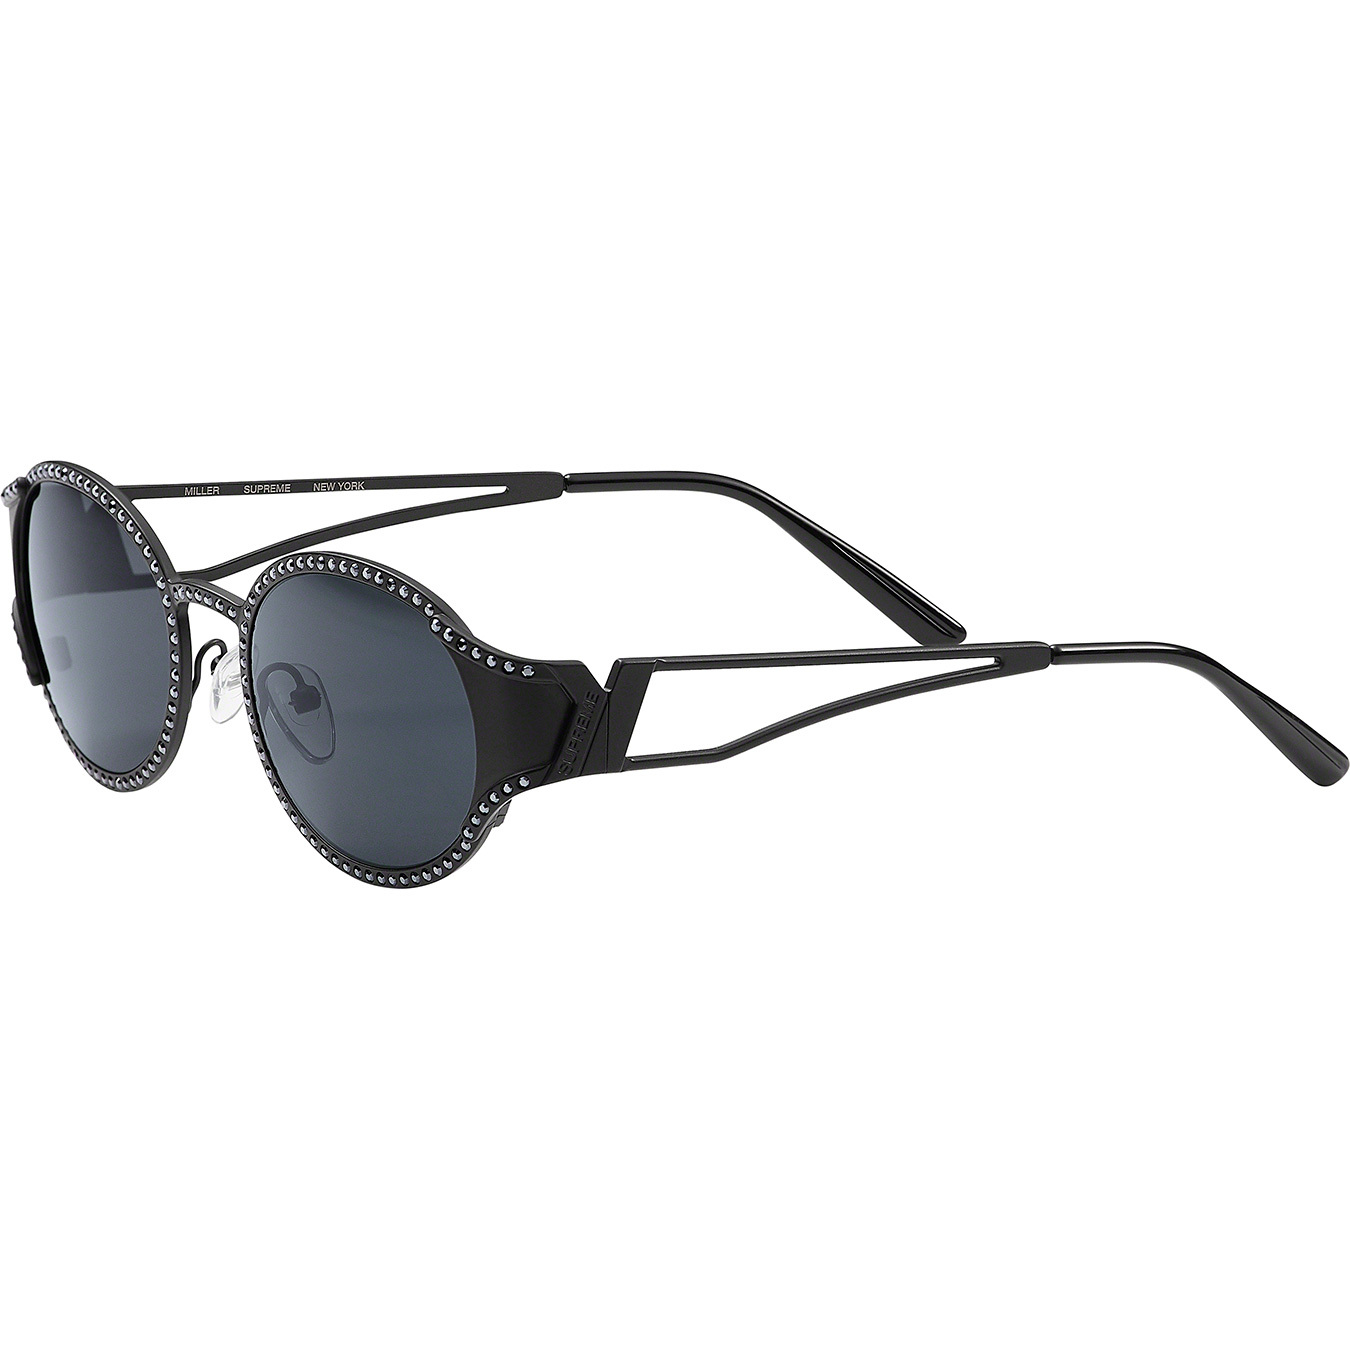 Supreme Miller Sunglasses